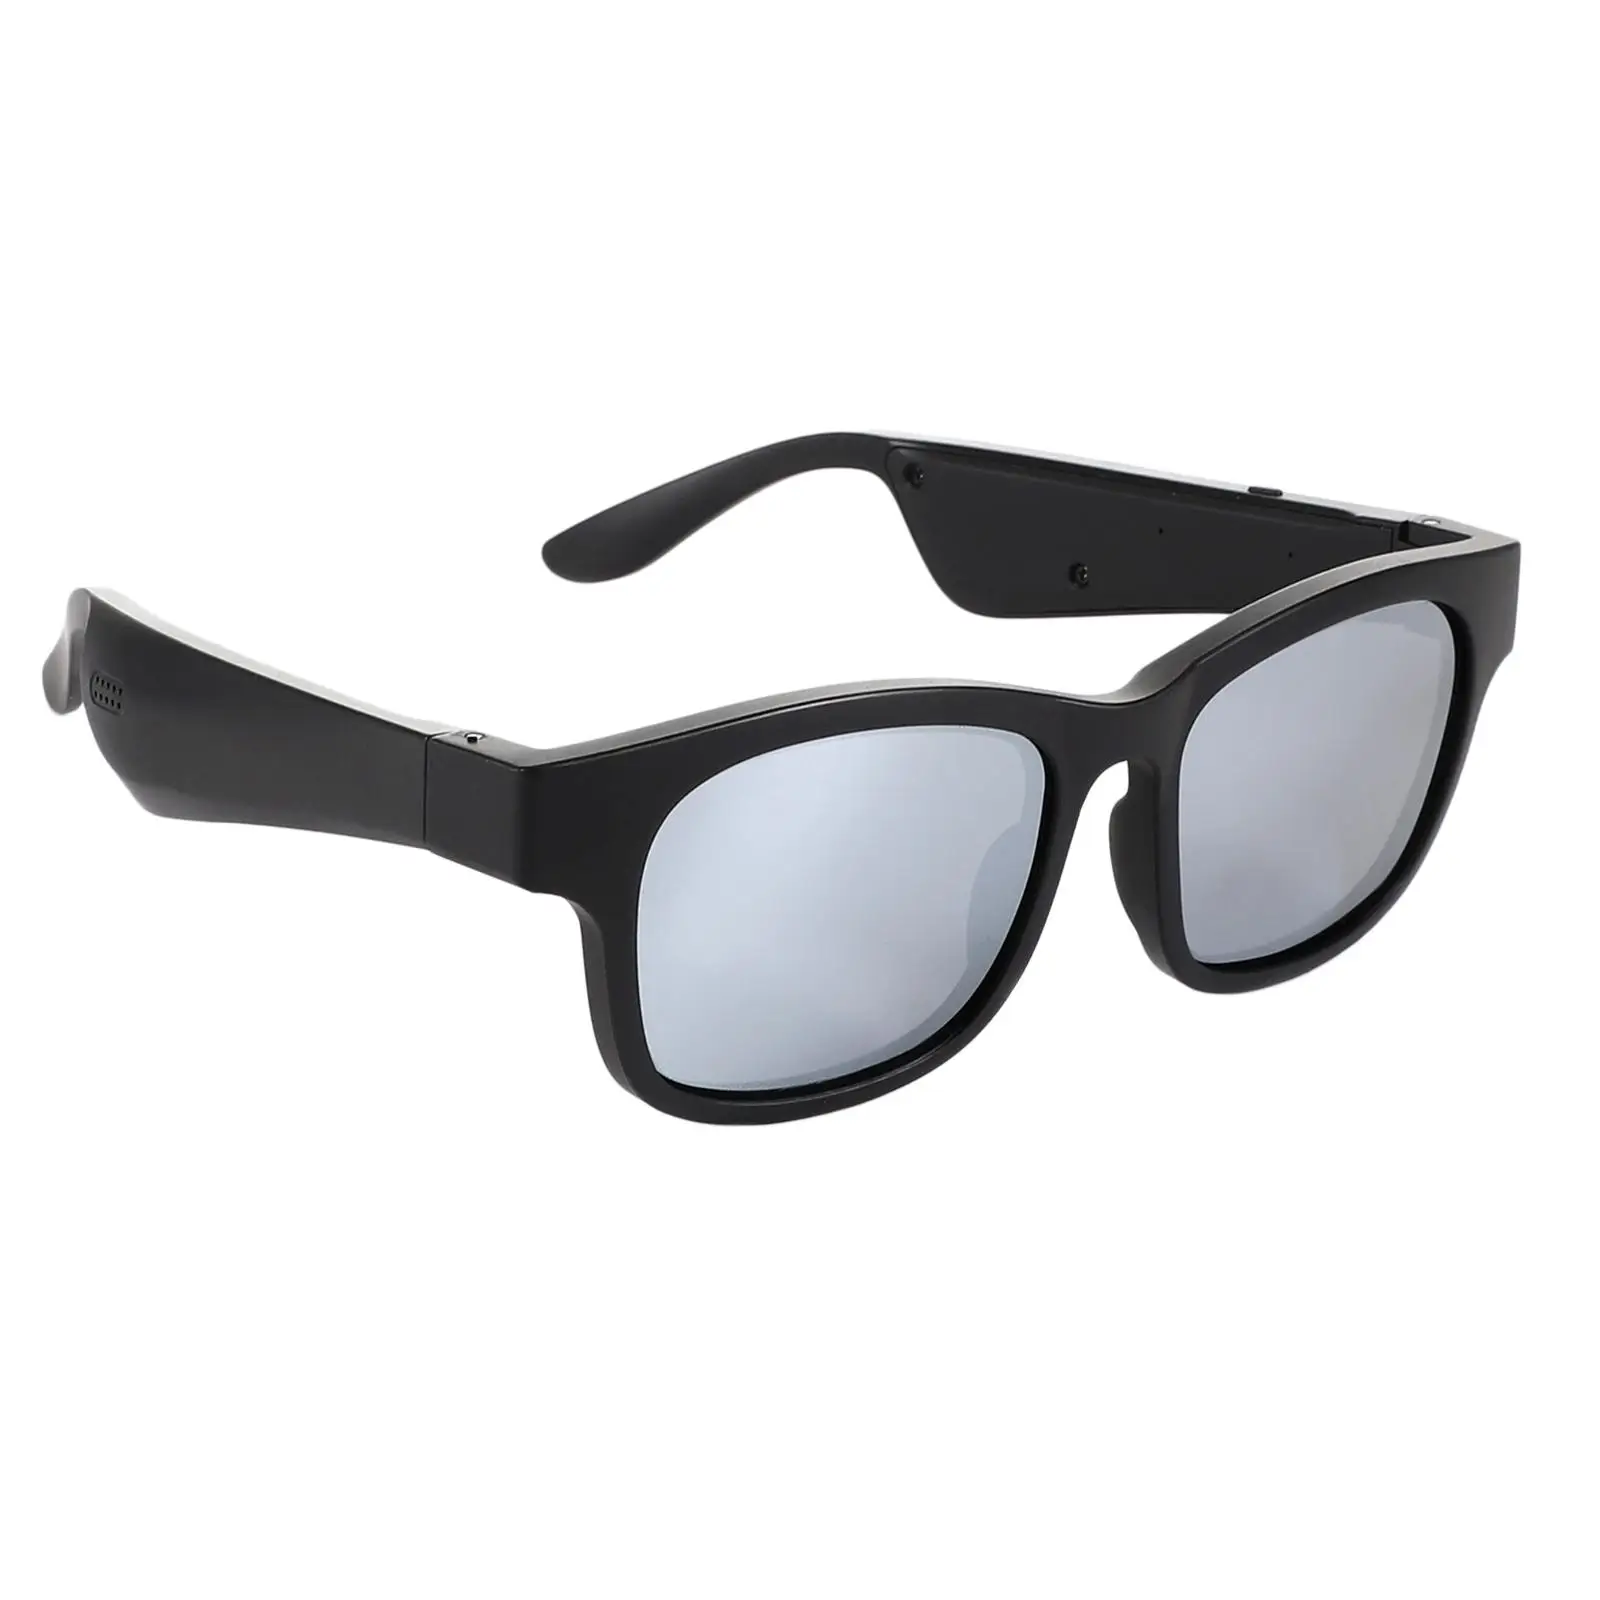 Bone Conduction Glasses Sunglasses Headphones,Open Ear Audio Sunglasses Speaker to Listen Music and Make Phone Calls